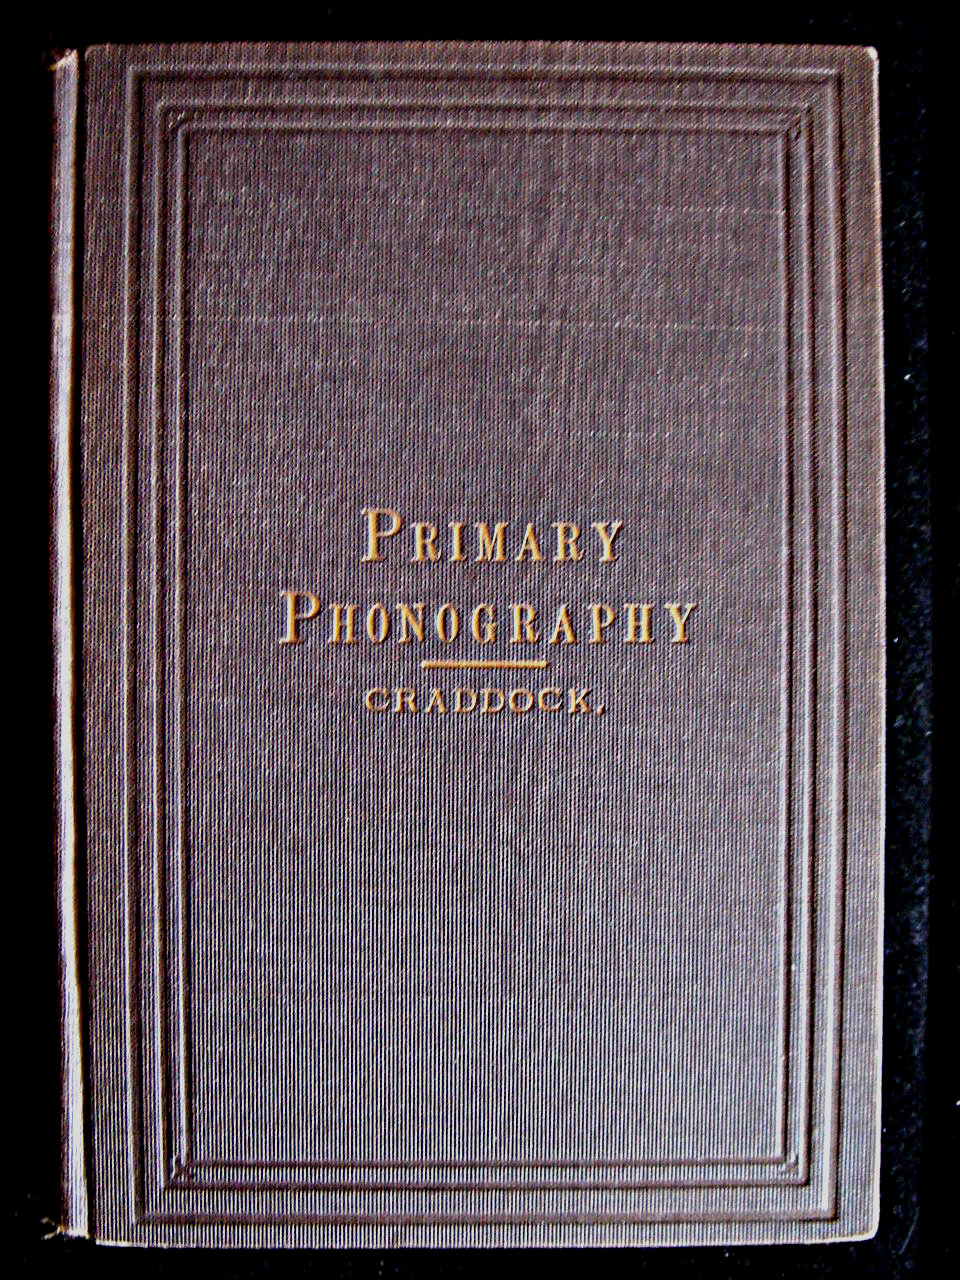 PRIMARY PHONOGRAPHY (Pitman), by Ida C. Craddock - 1884